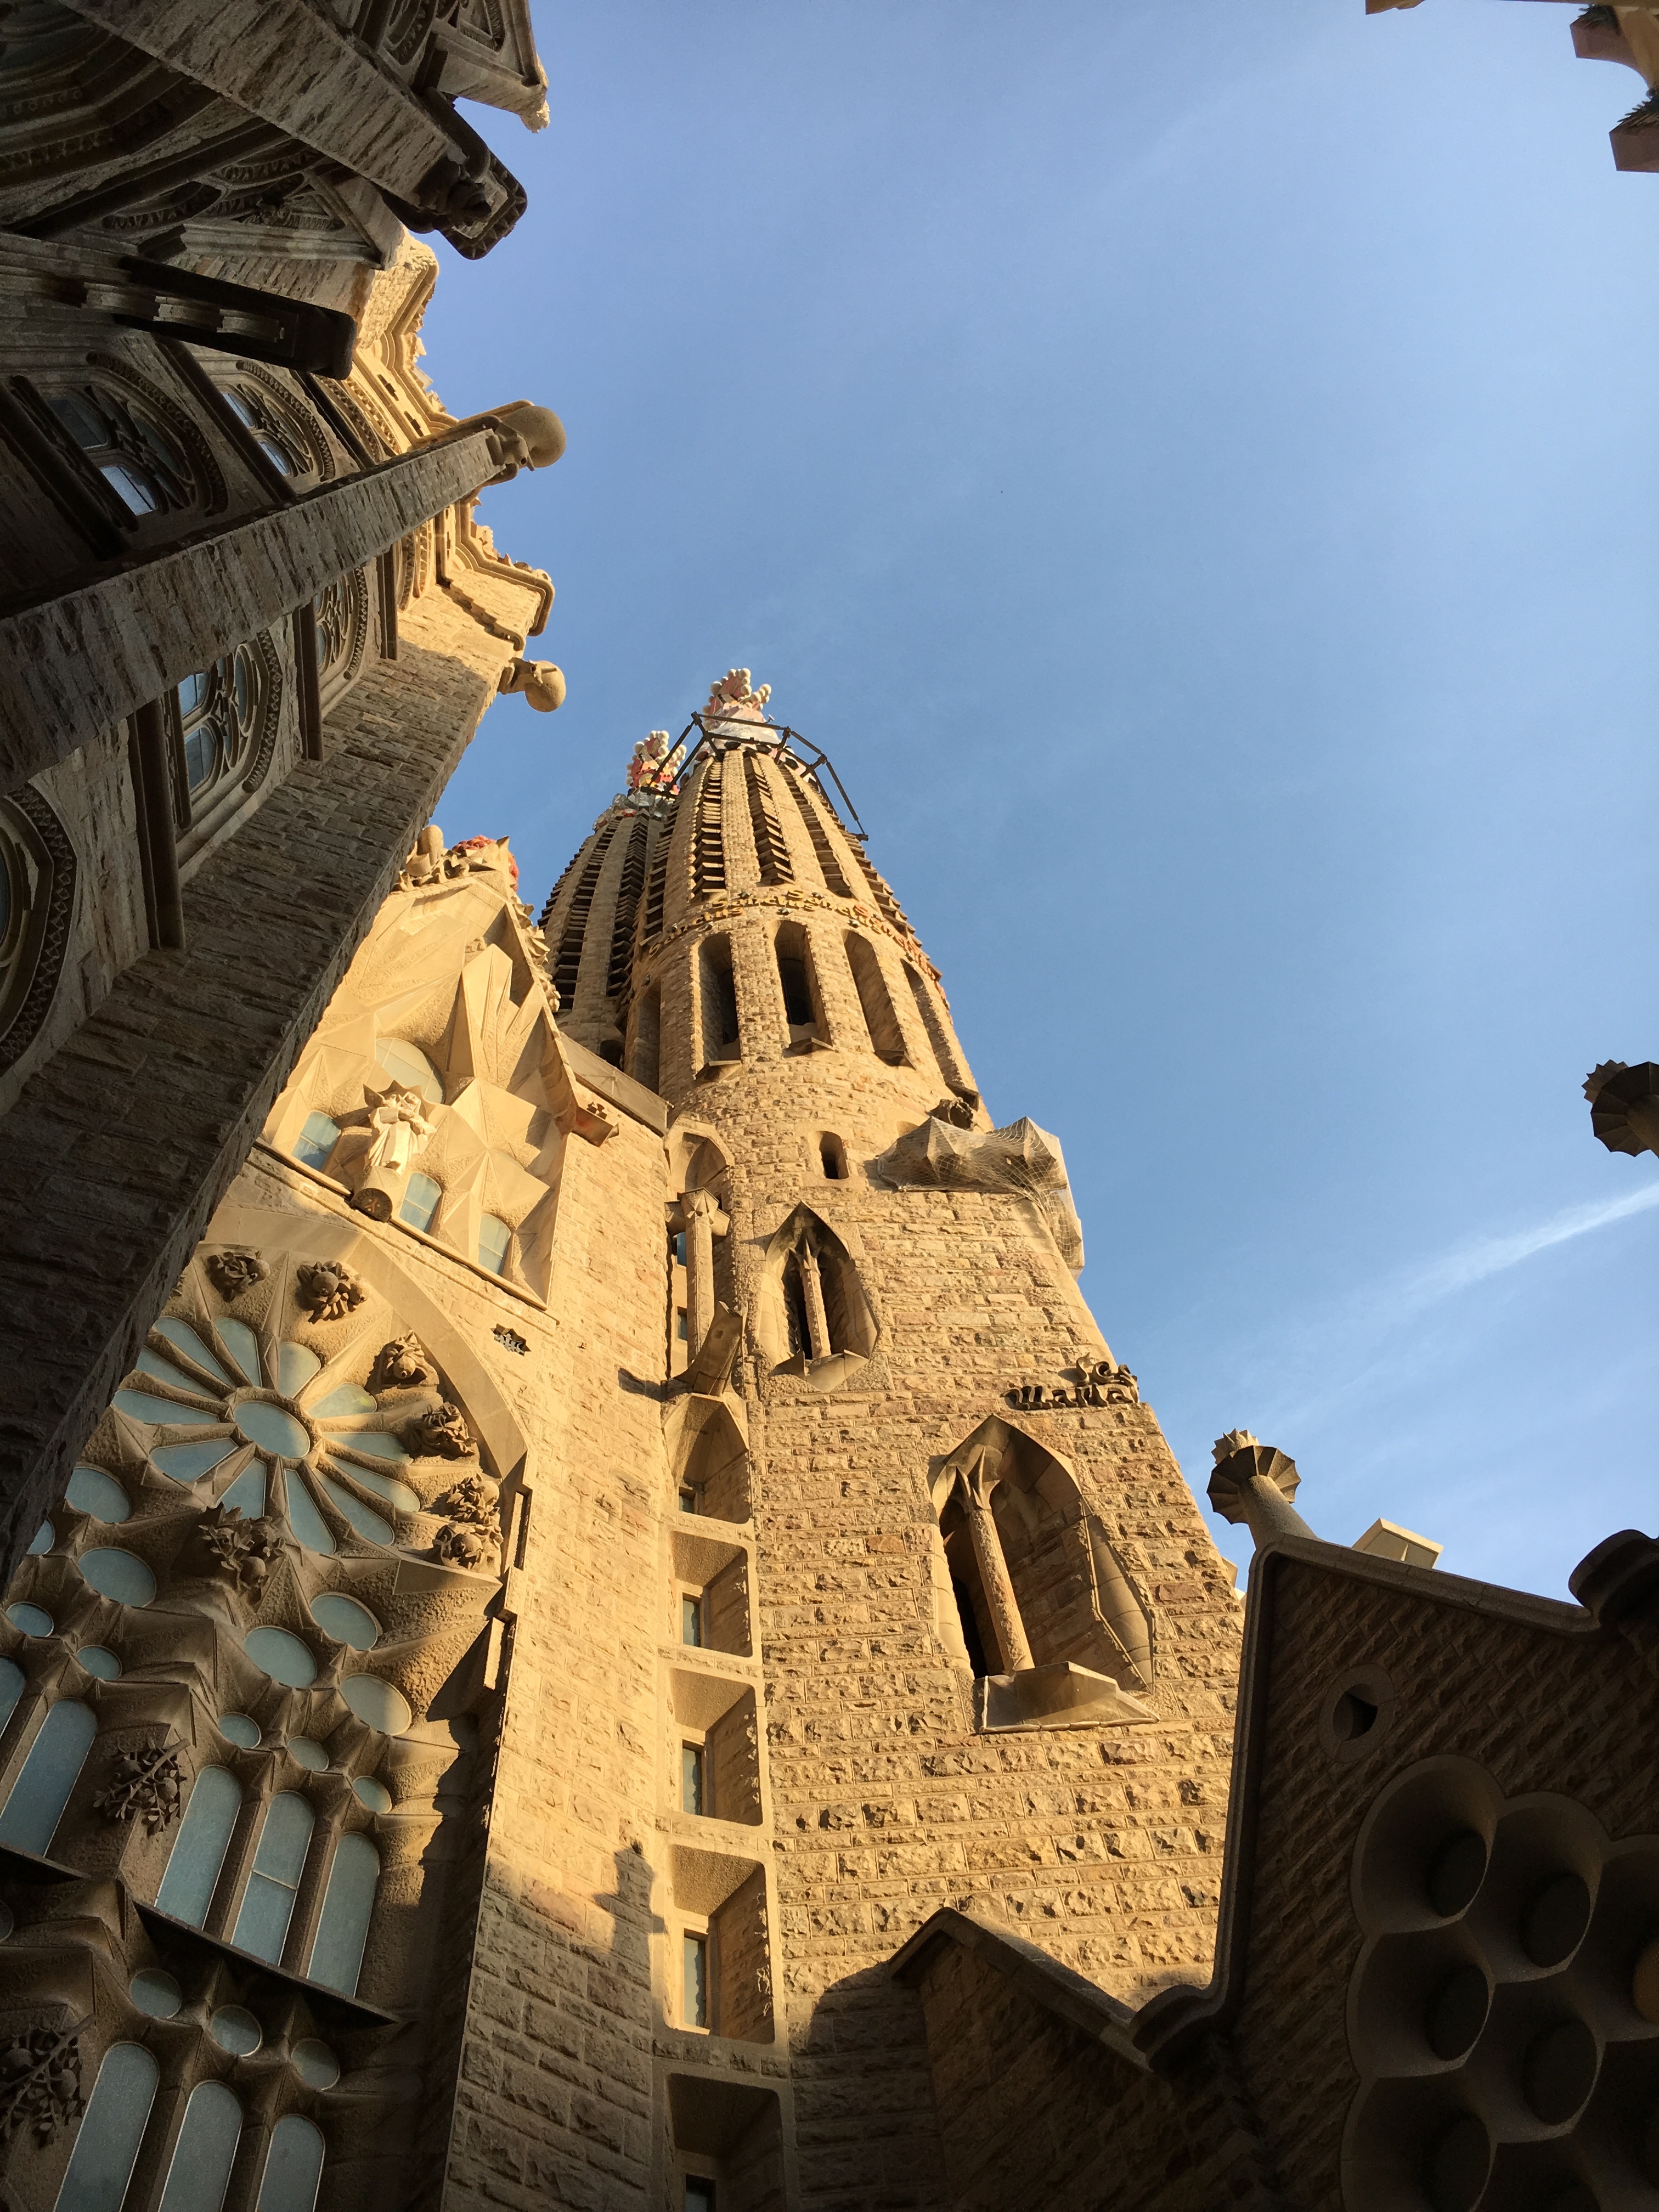 Bring Your Whole Family to “The Sagrada Familia”